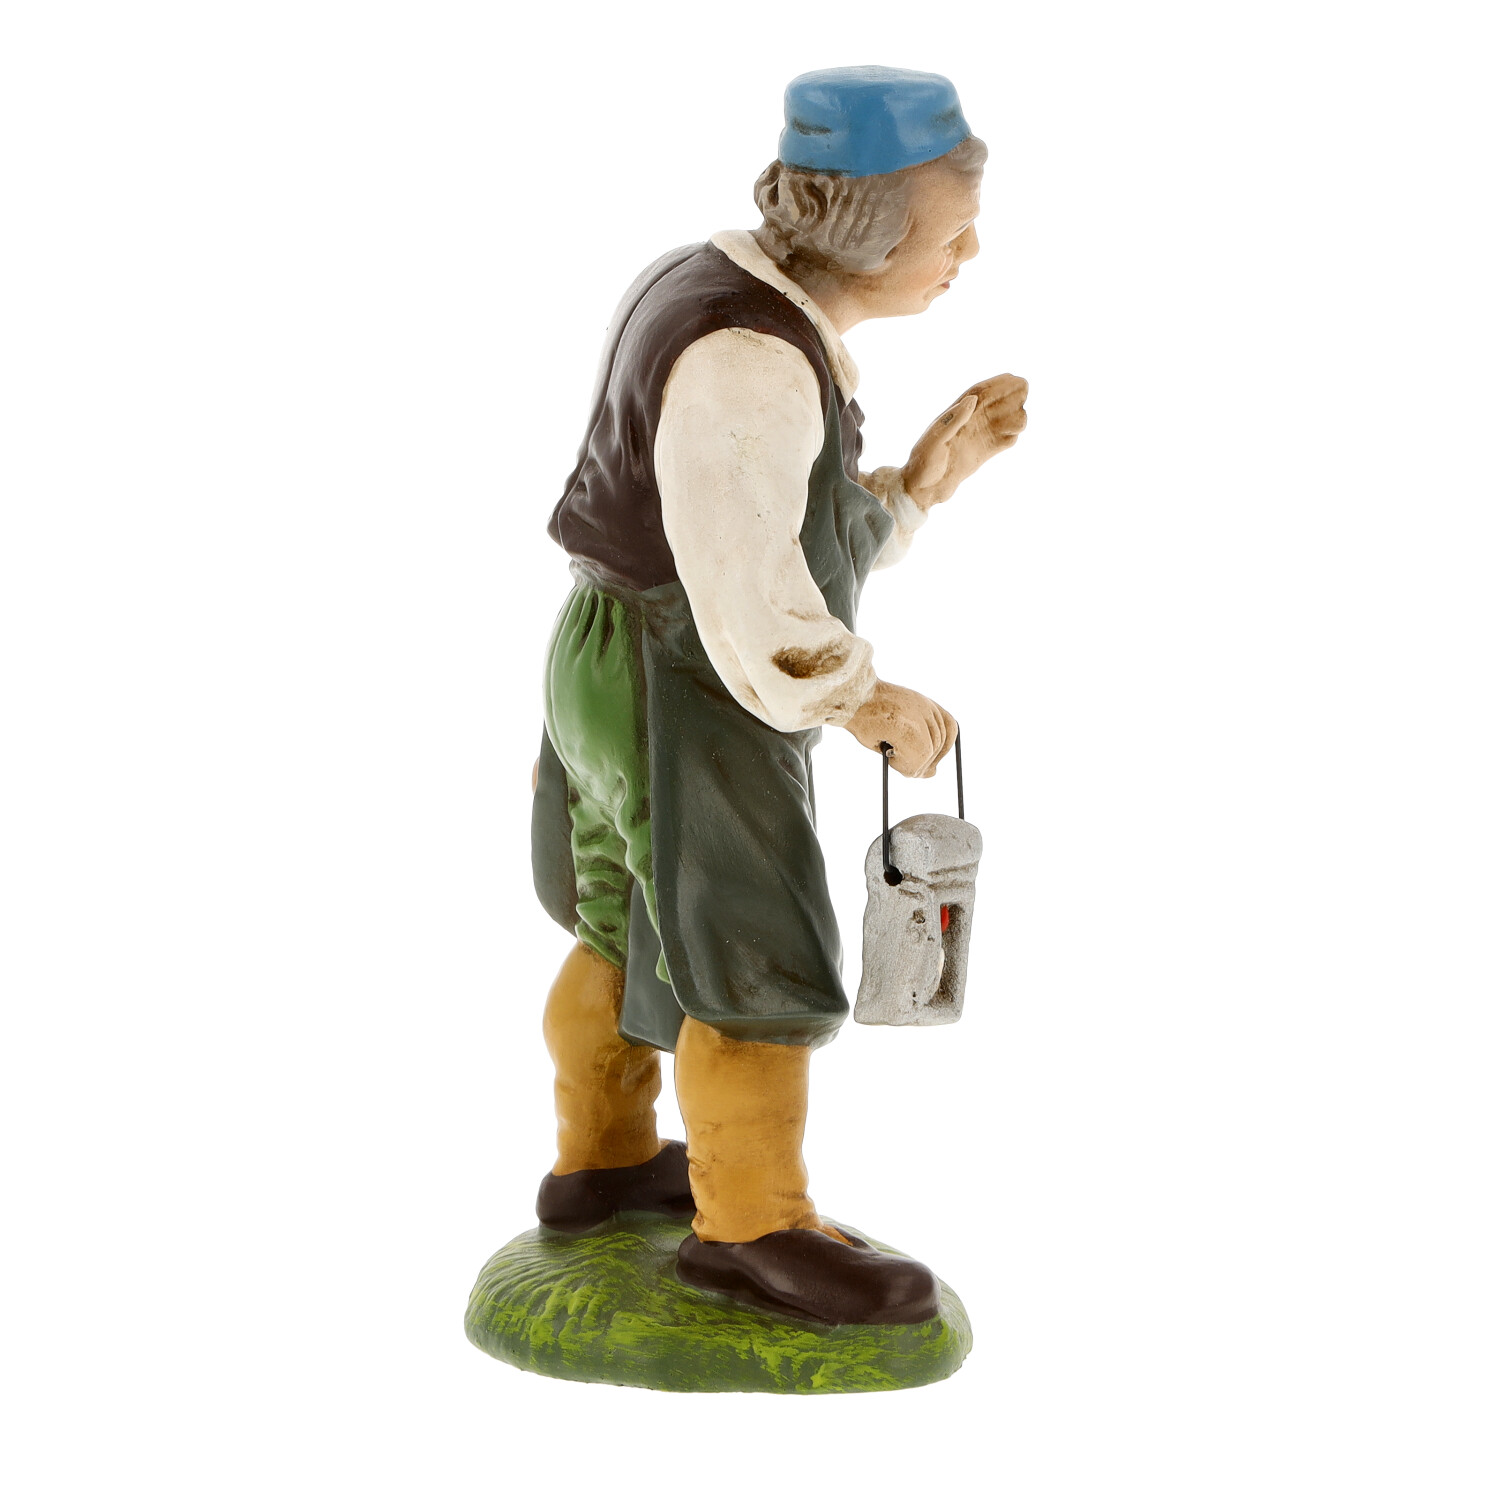 Landlord with lantern - Marolin Nativity figure - made in Germany